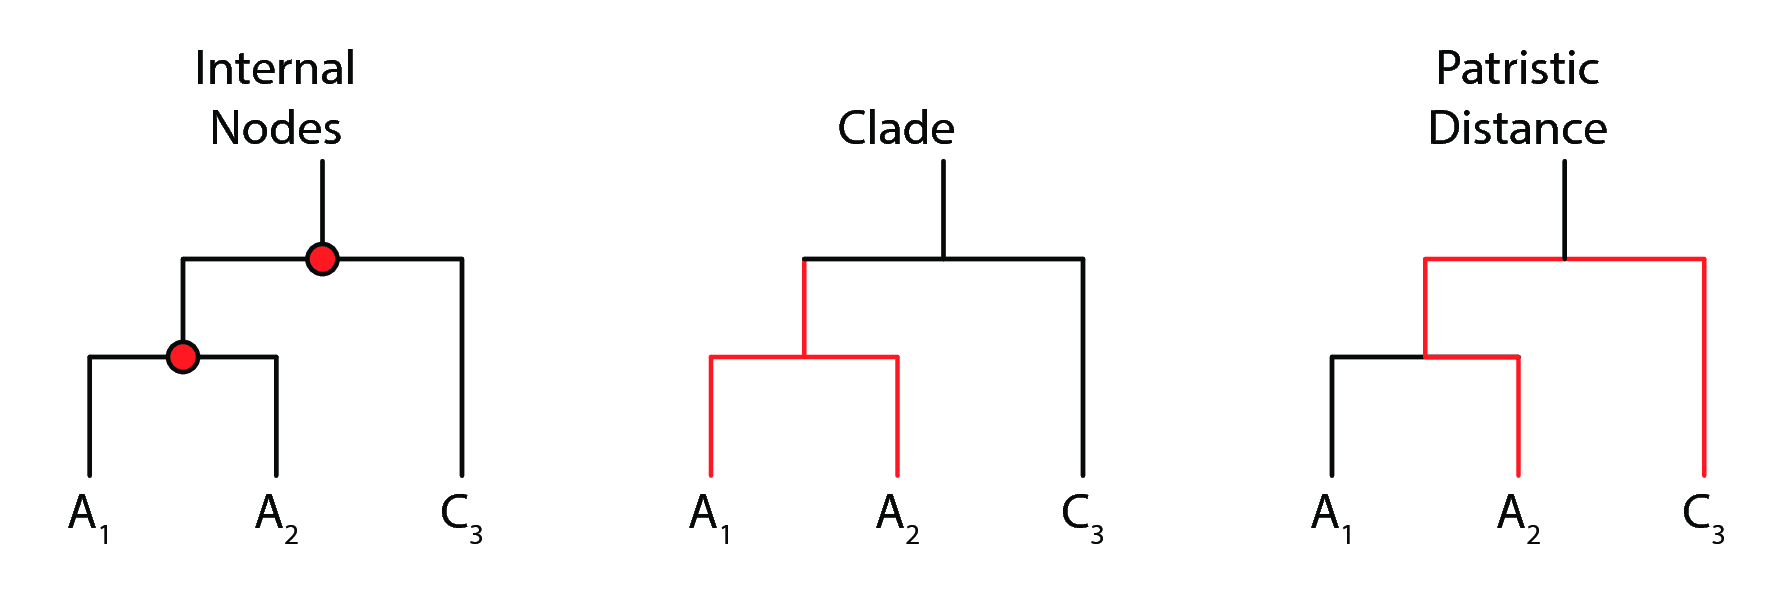 Figure 5: Visual definition of internal nodes, clades, and patristic distances.